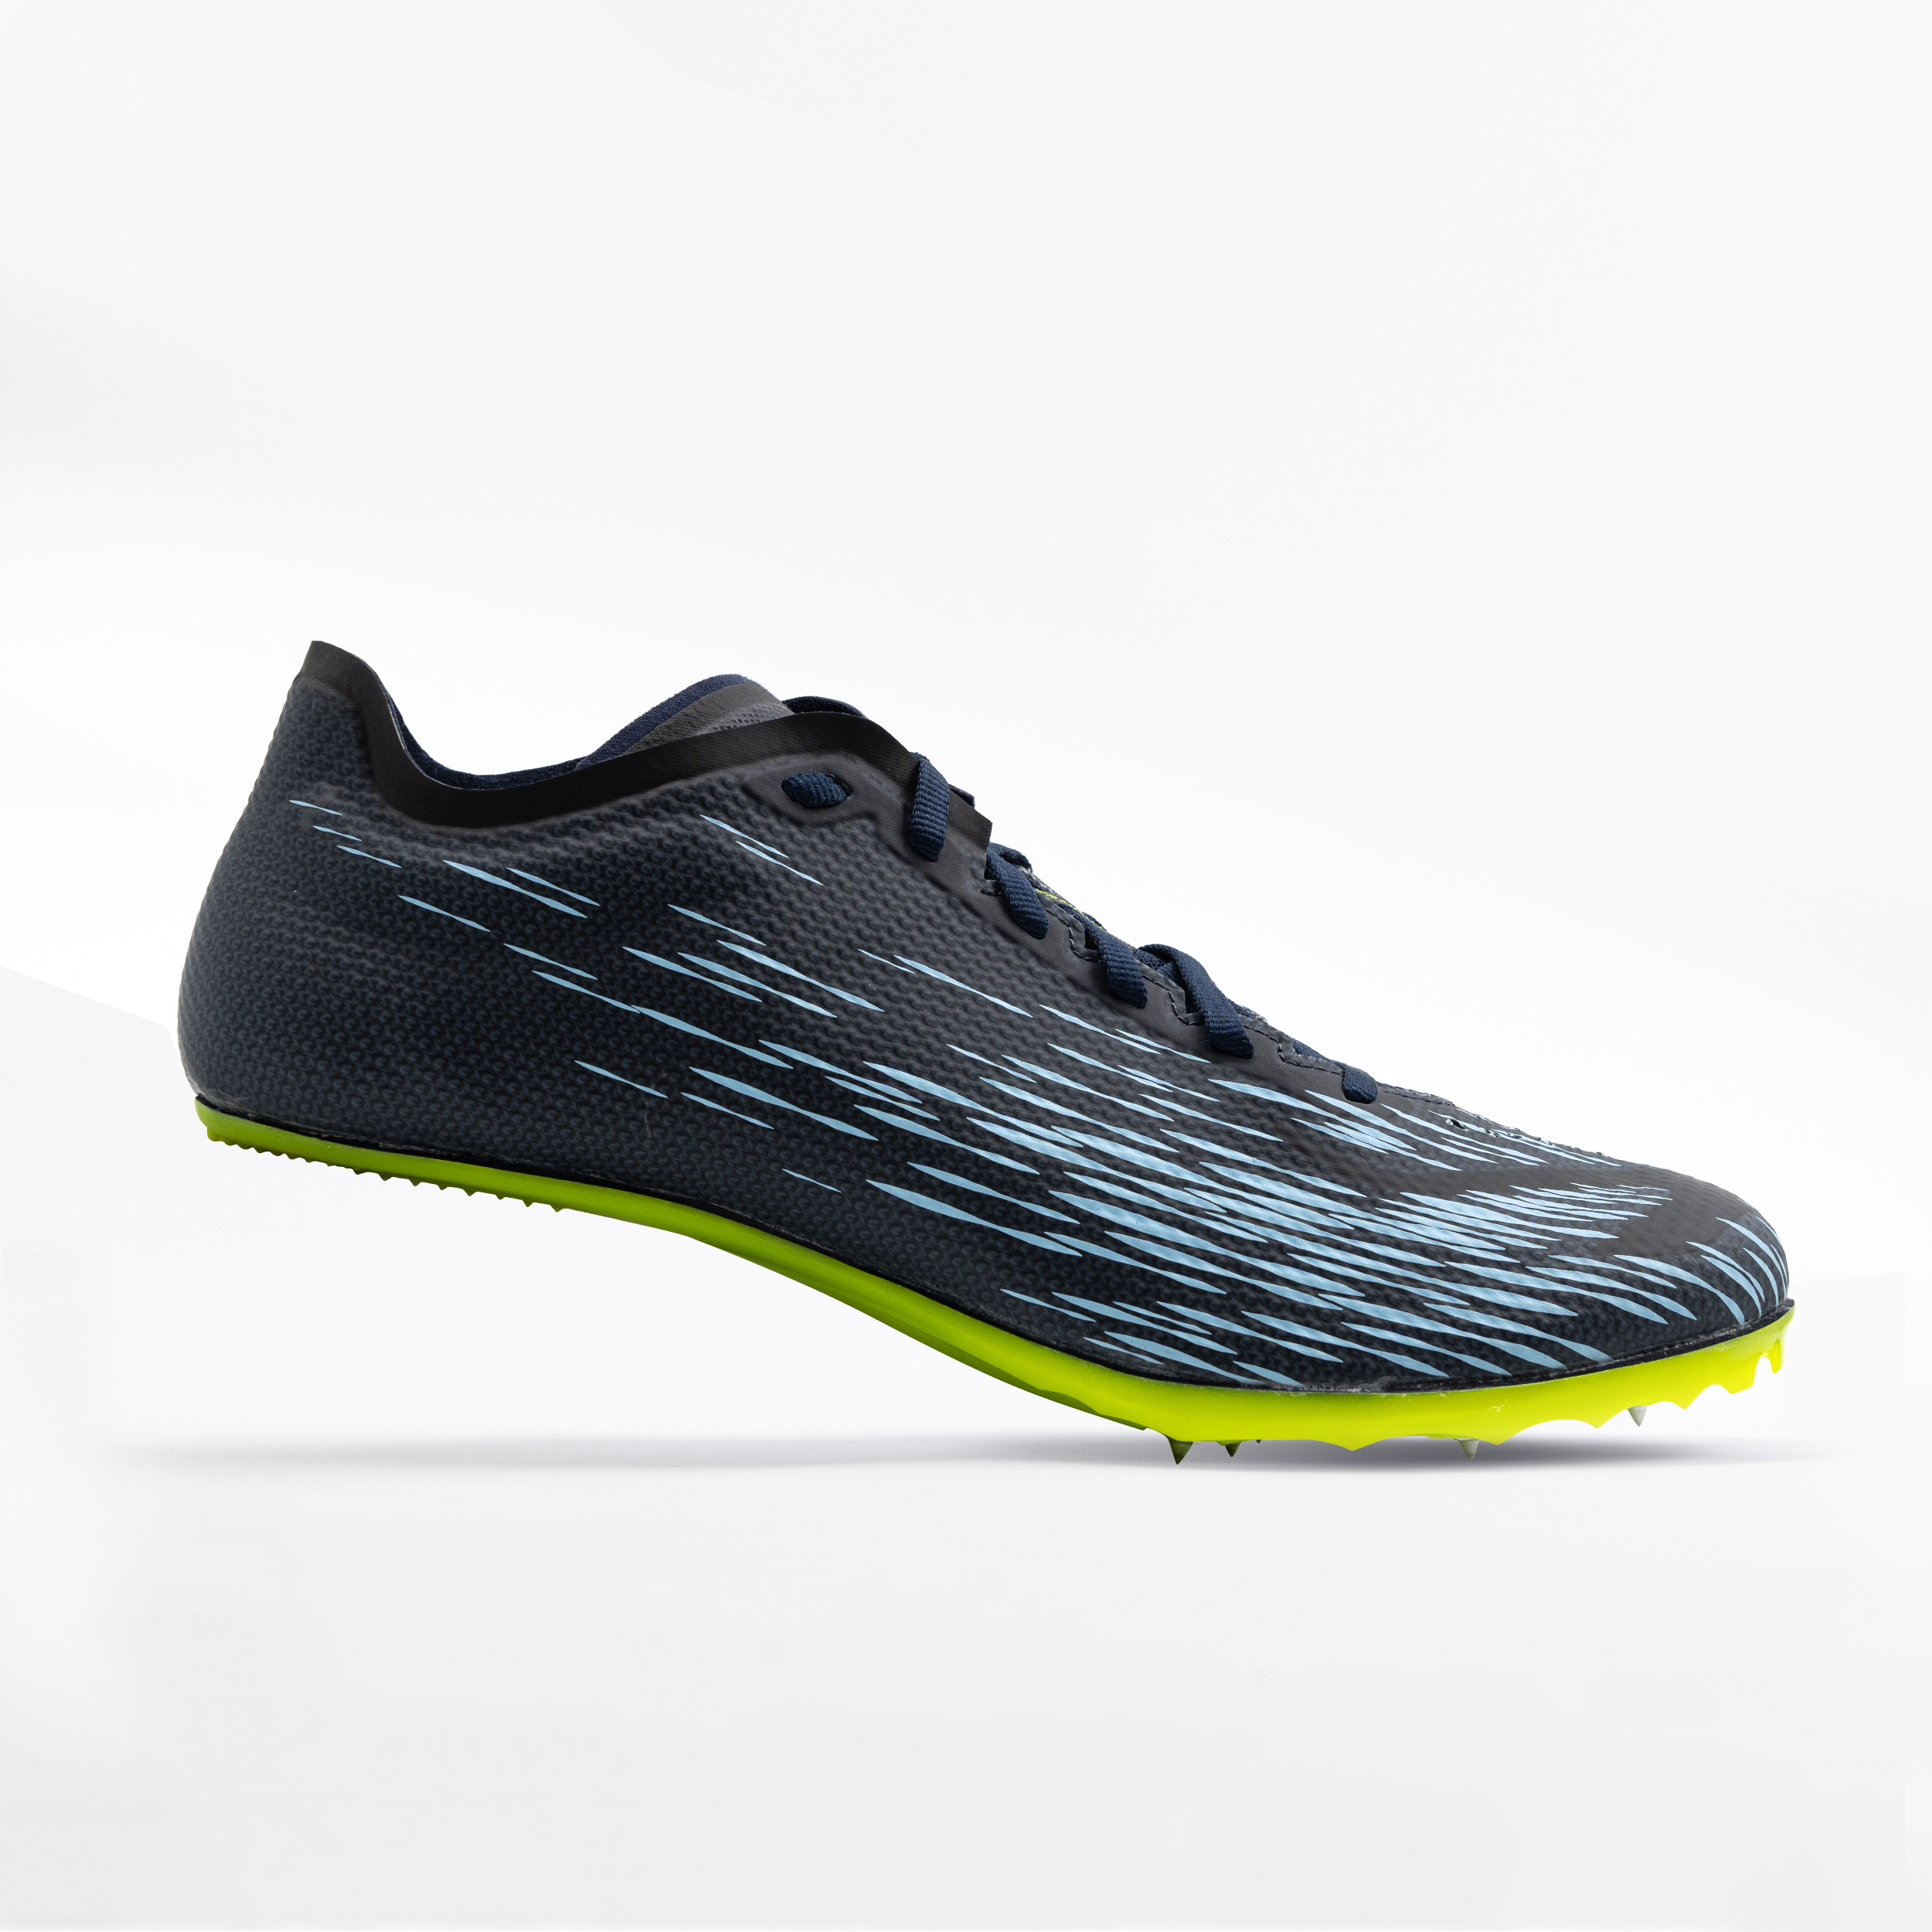 Chaussures d'athlétisme pour chaussures d'athlétisme Spike Running Sprint  Athletic Shoes